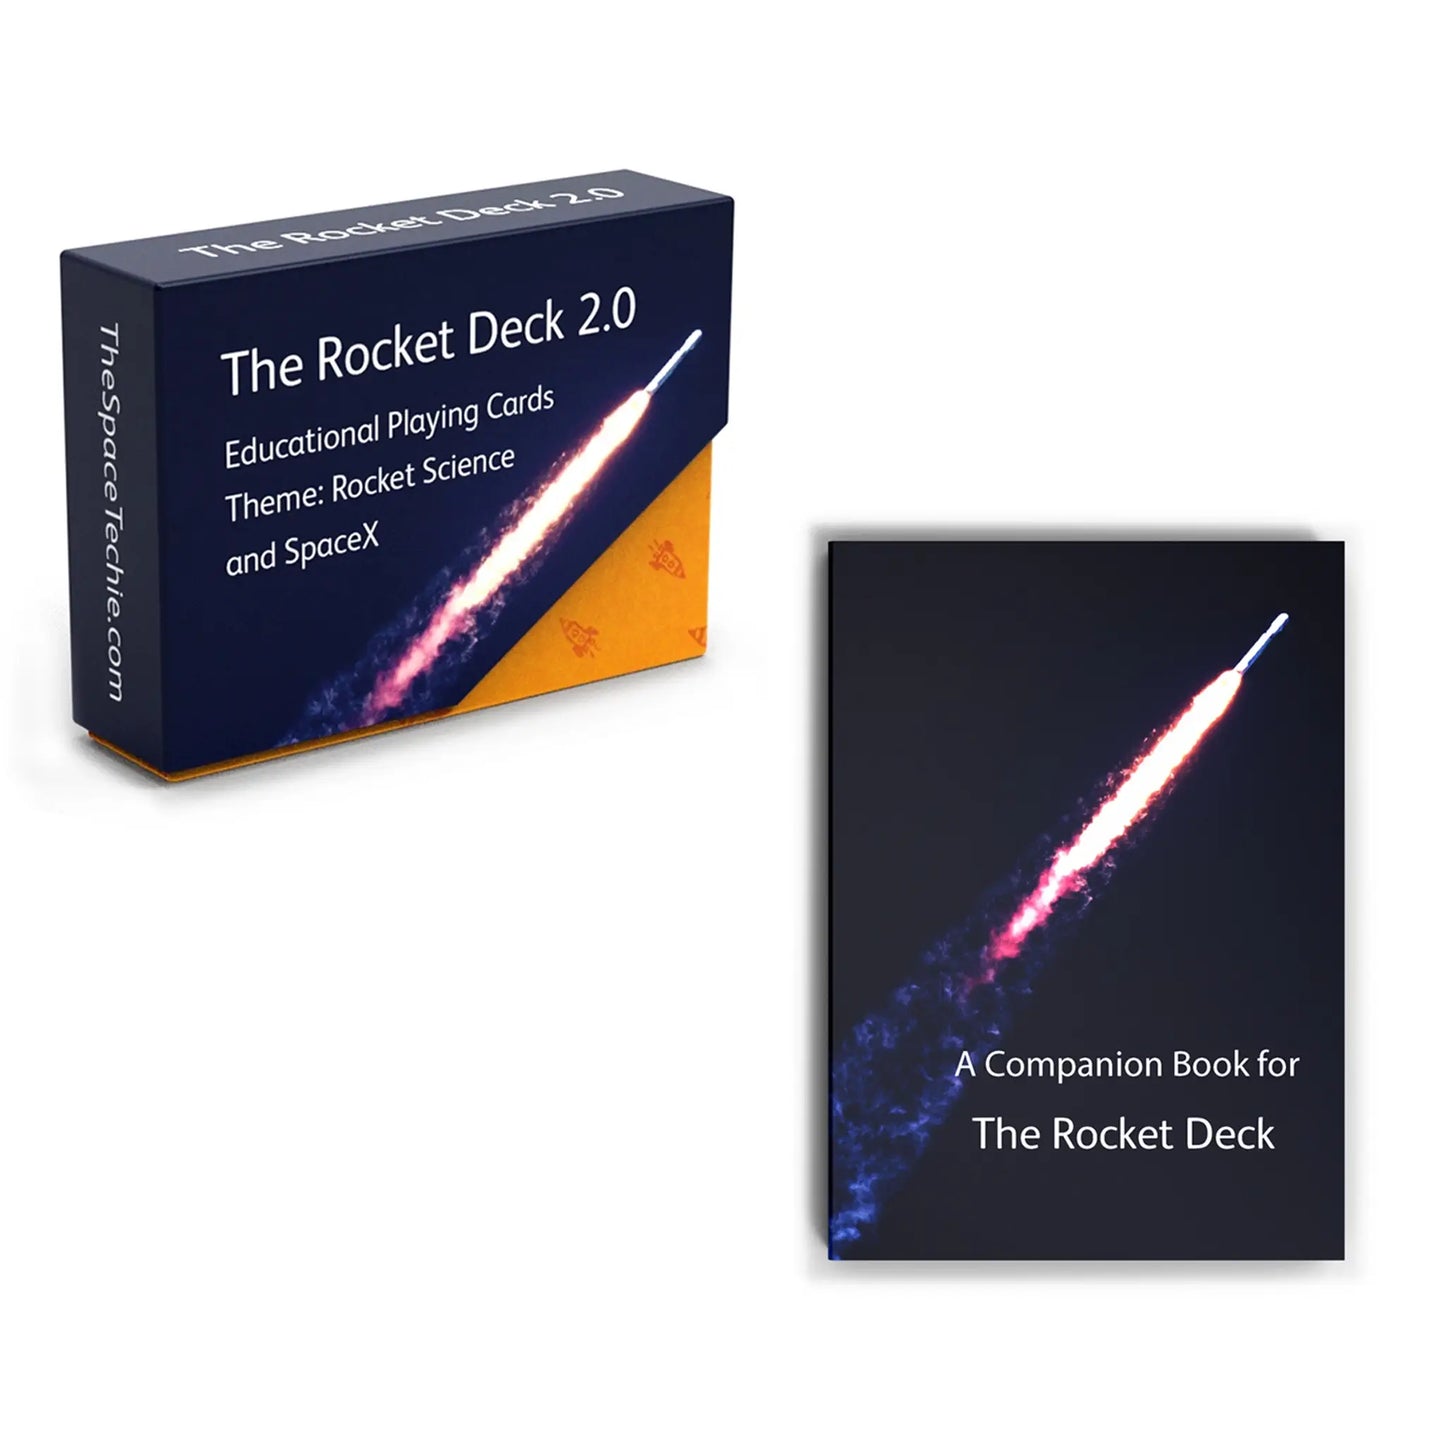 Rocket Deck and book by Liquid Bird